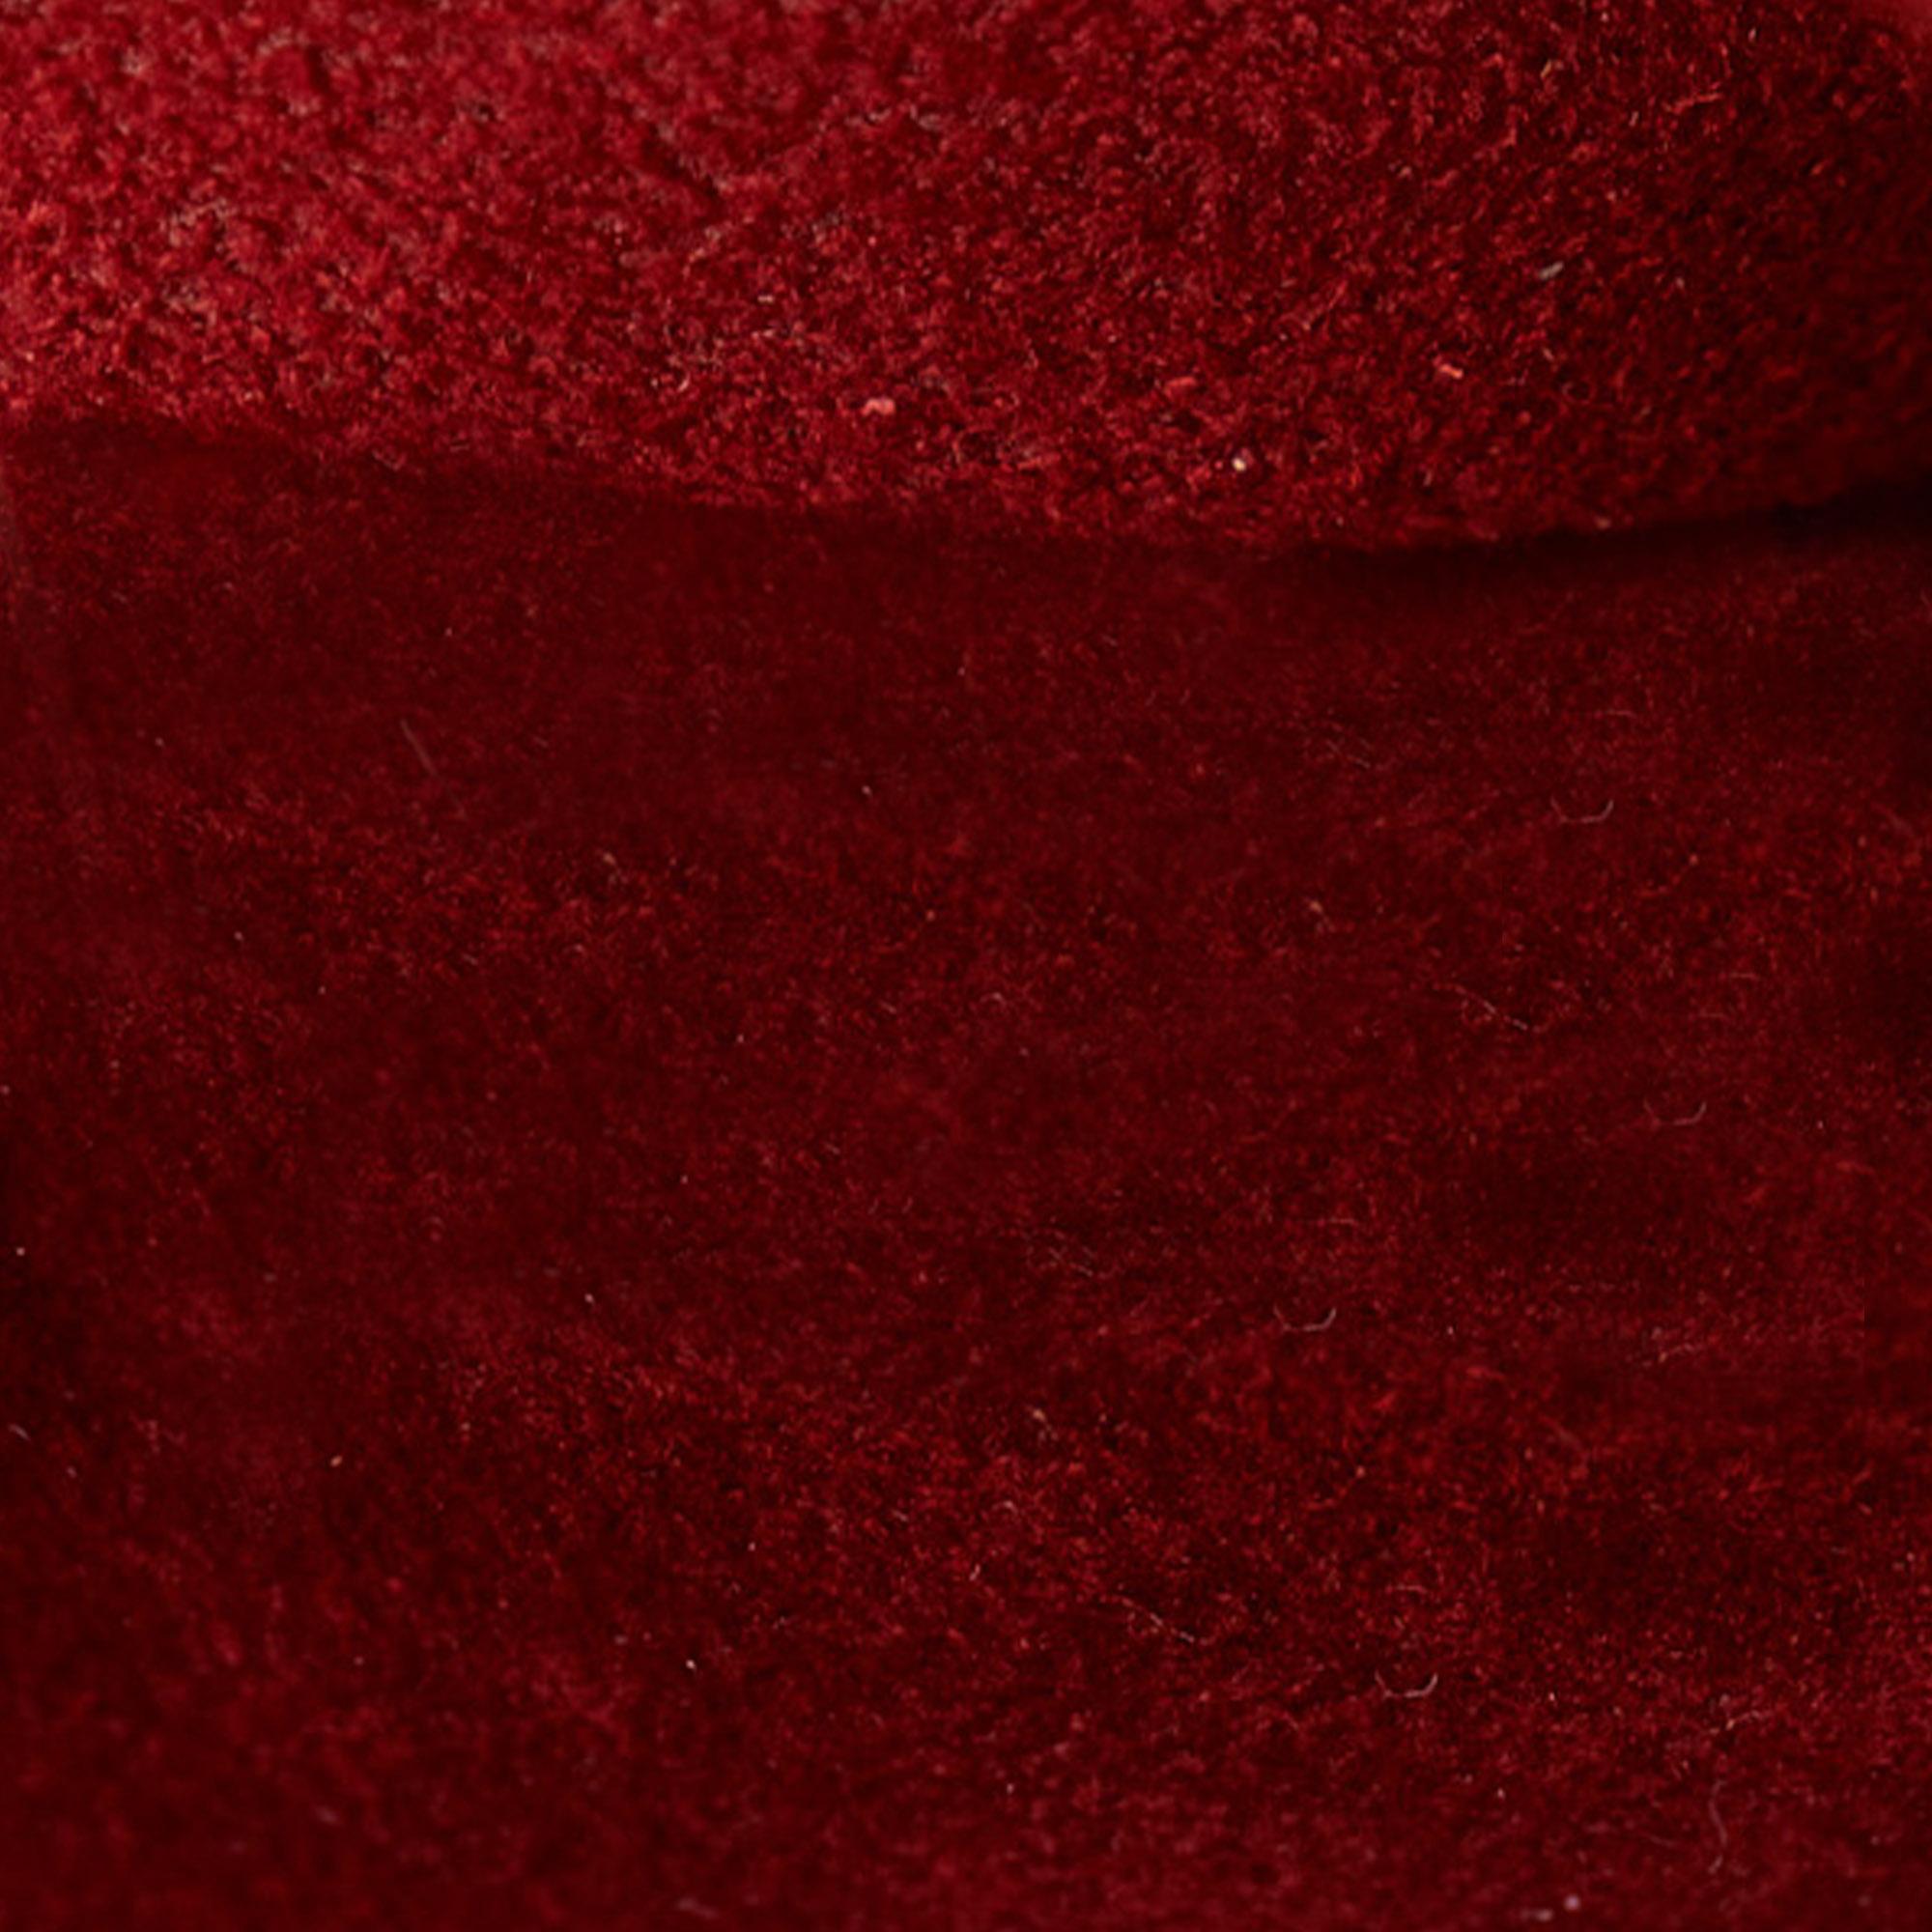 Louis Vuitton Red Epi Alma BB